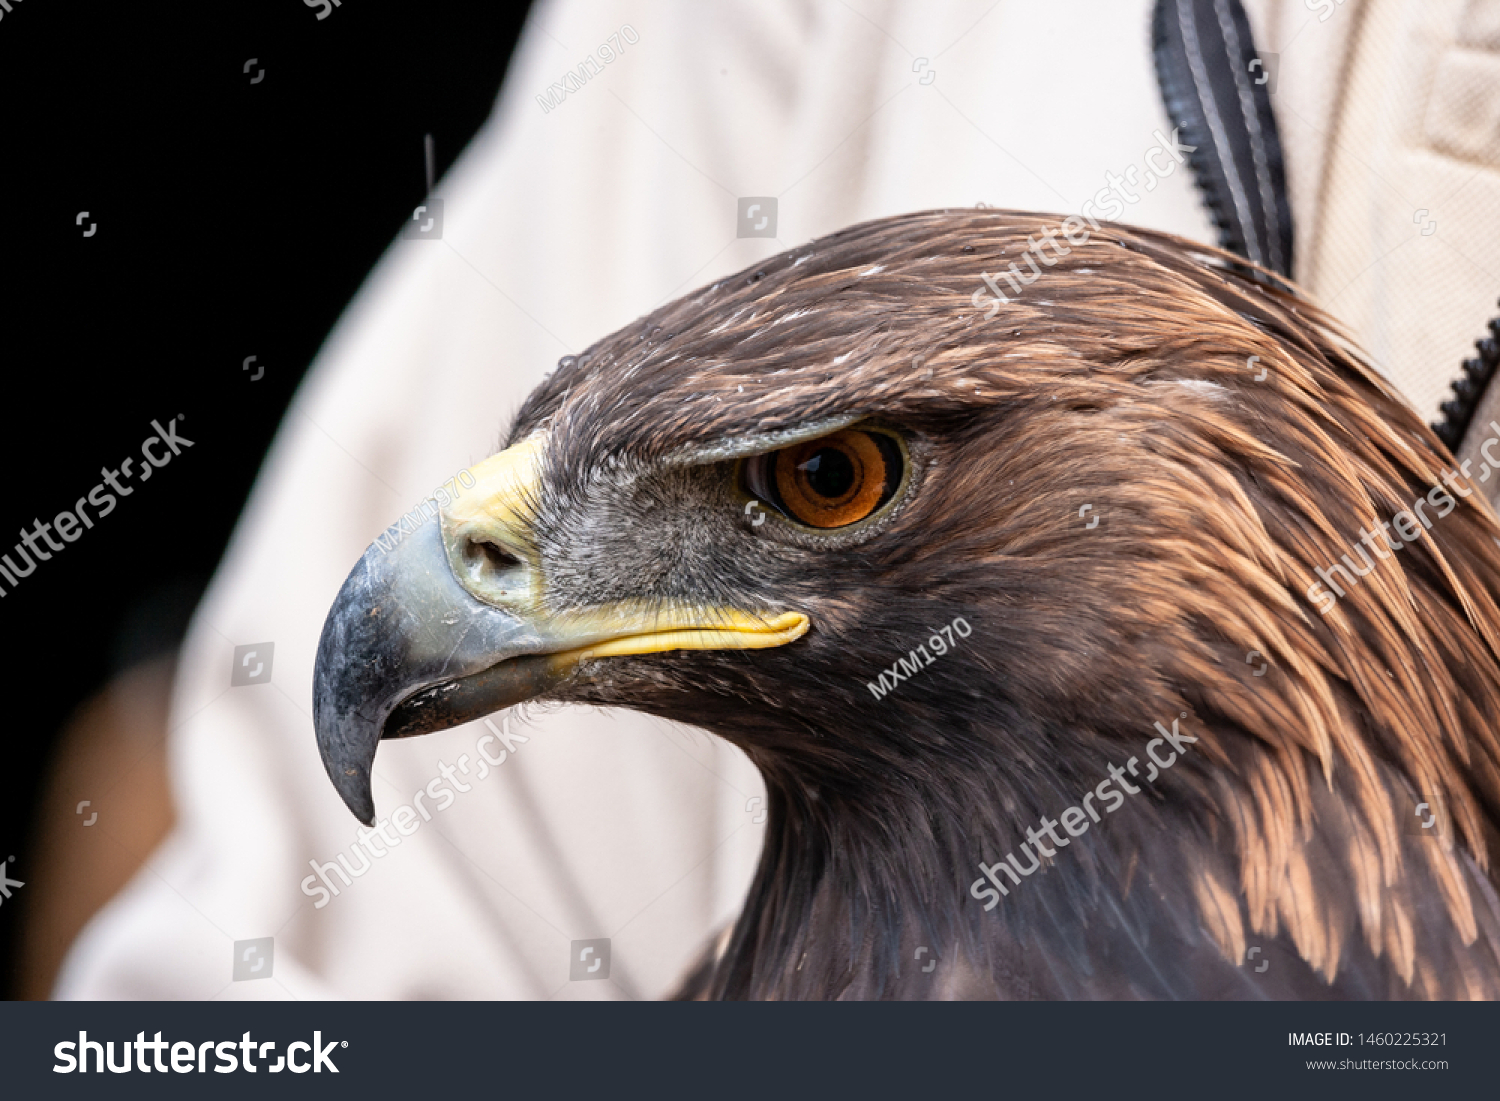 A golden eagle released after a mishap (original size) #1460225321